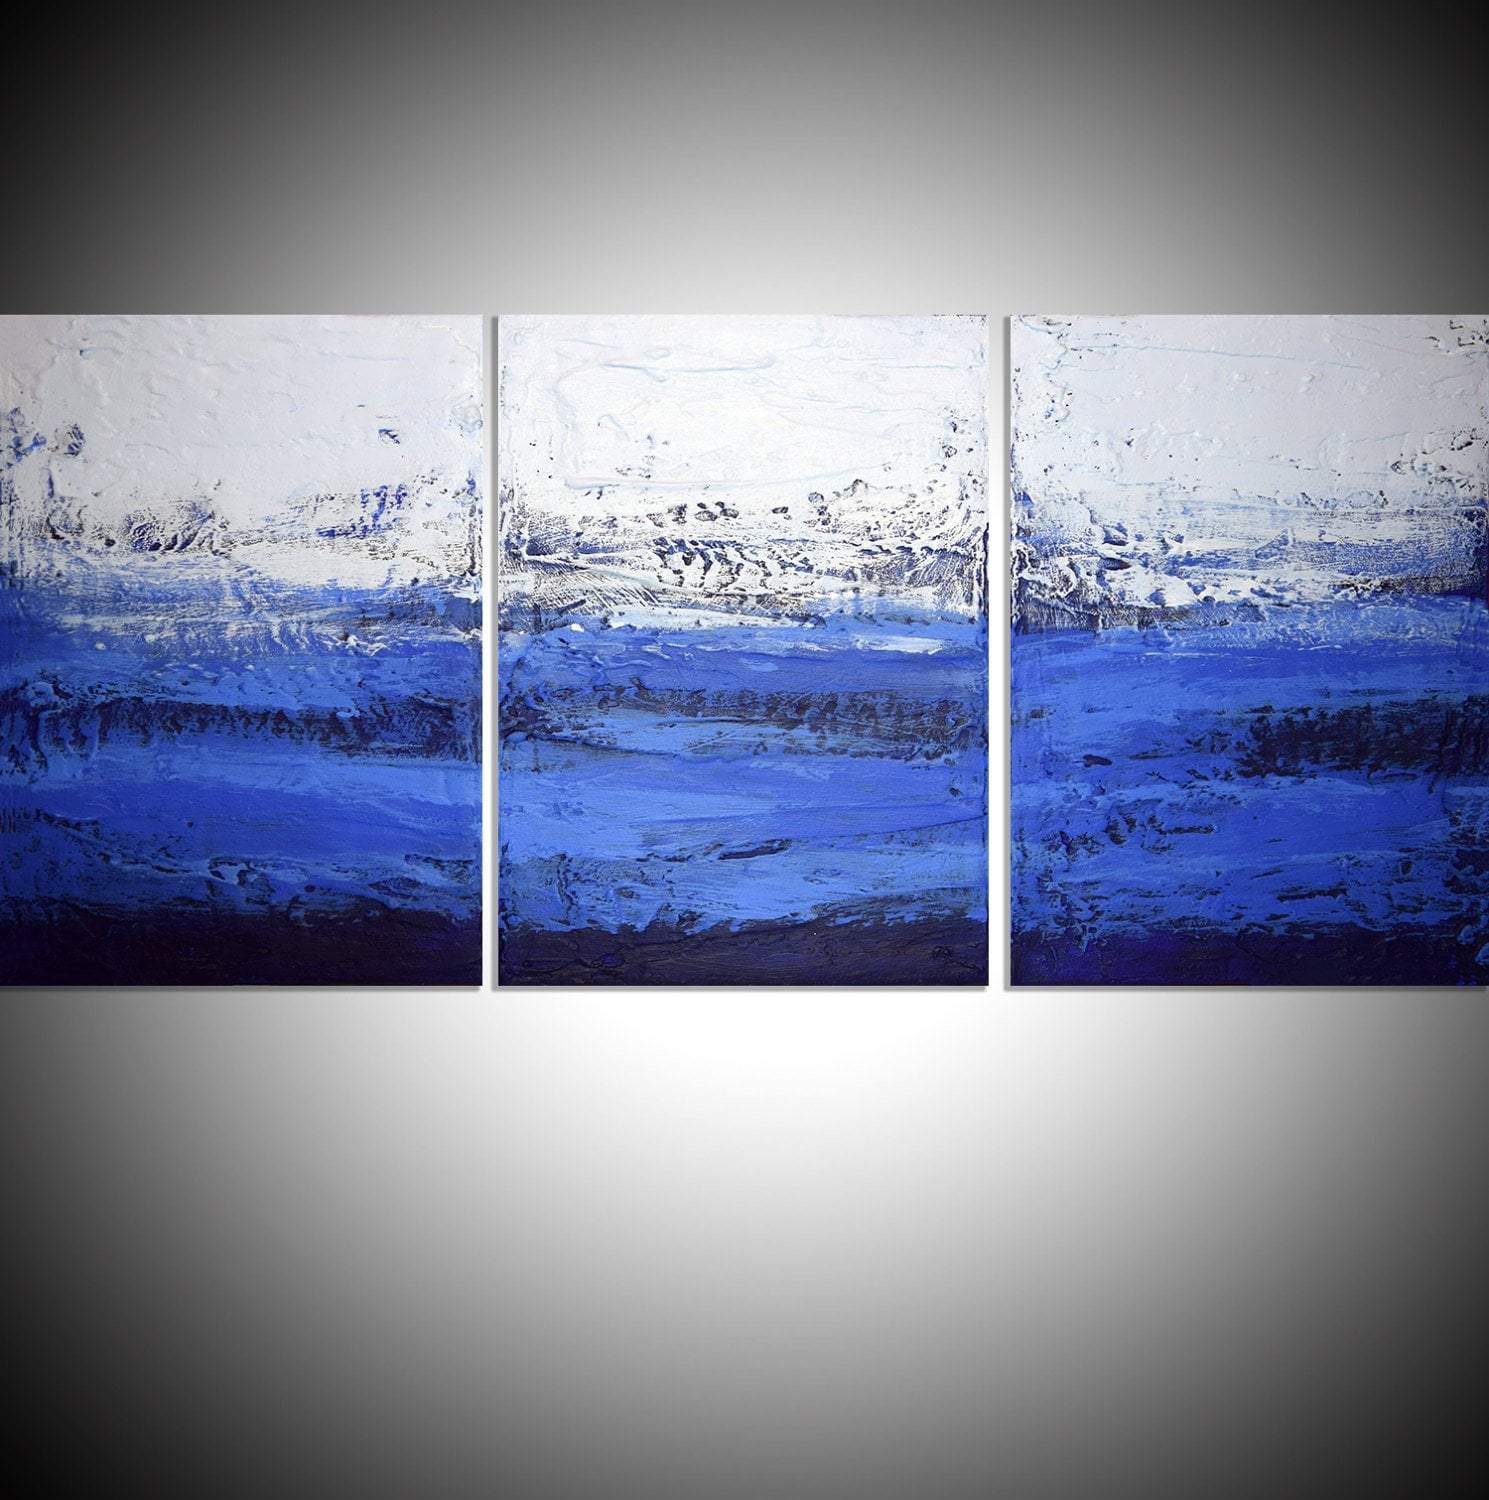 Ultramarine Triptych pictures